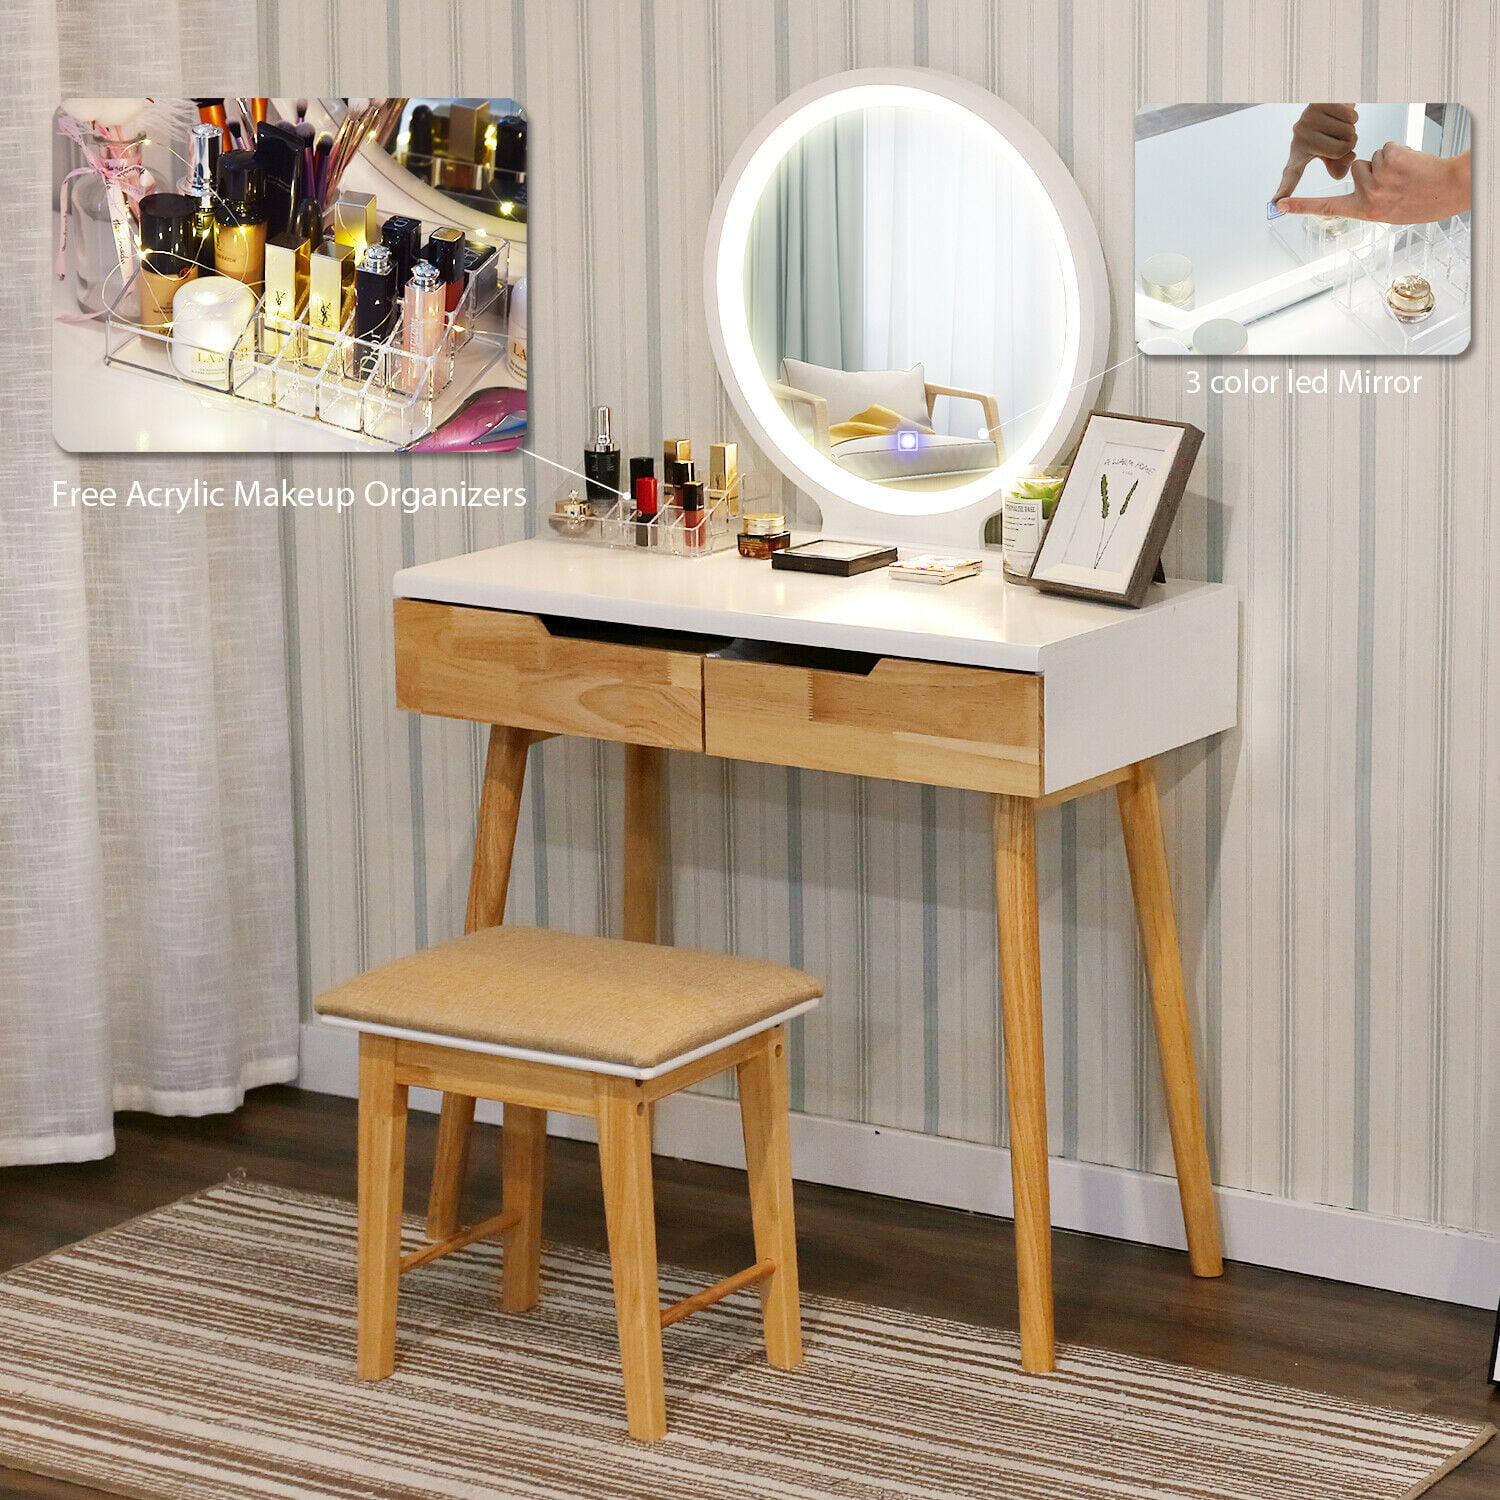 Round mirror Girl Vanity Makeup Table Set Desk W/wood legs Upholstered Stool